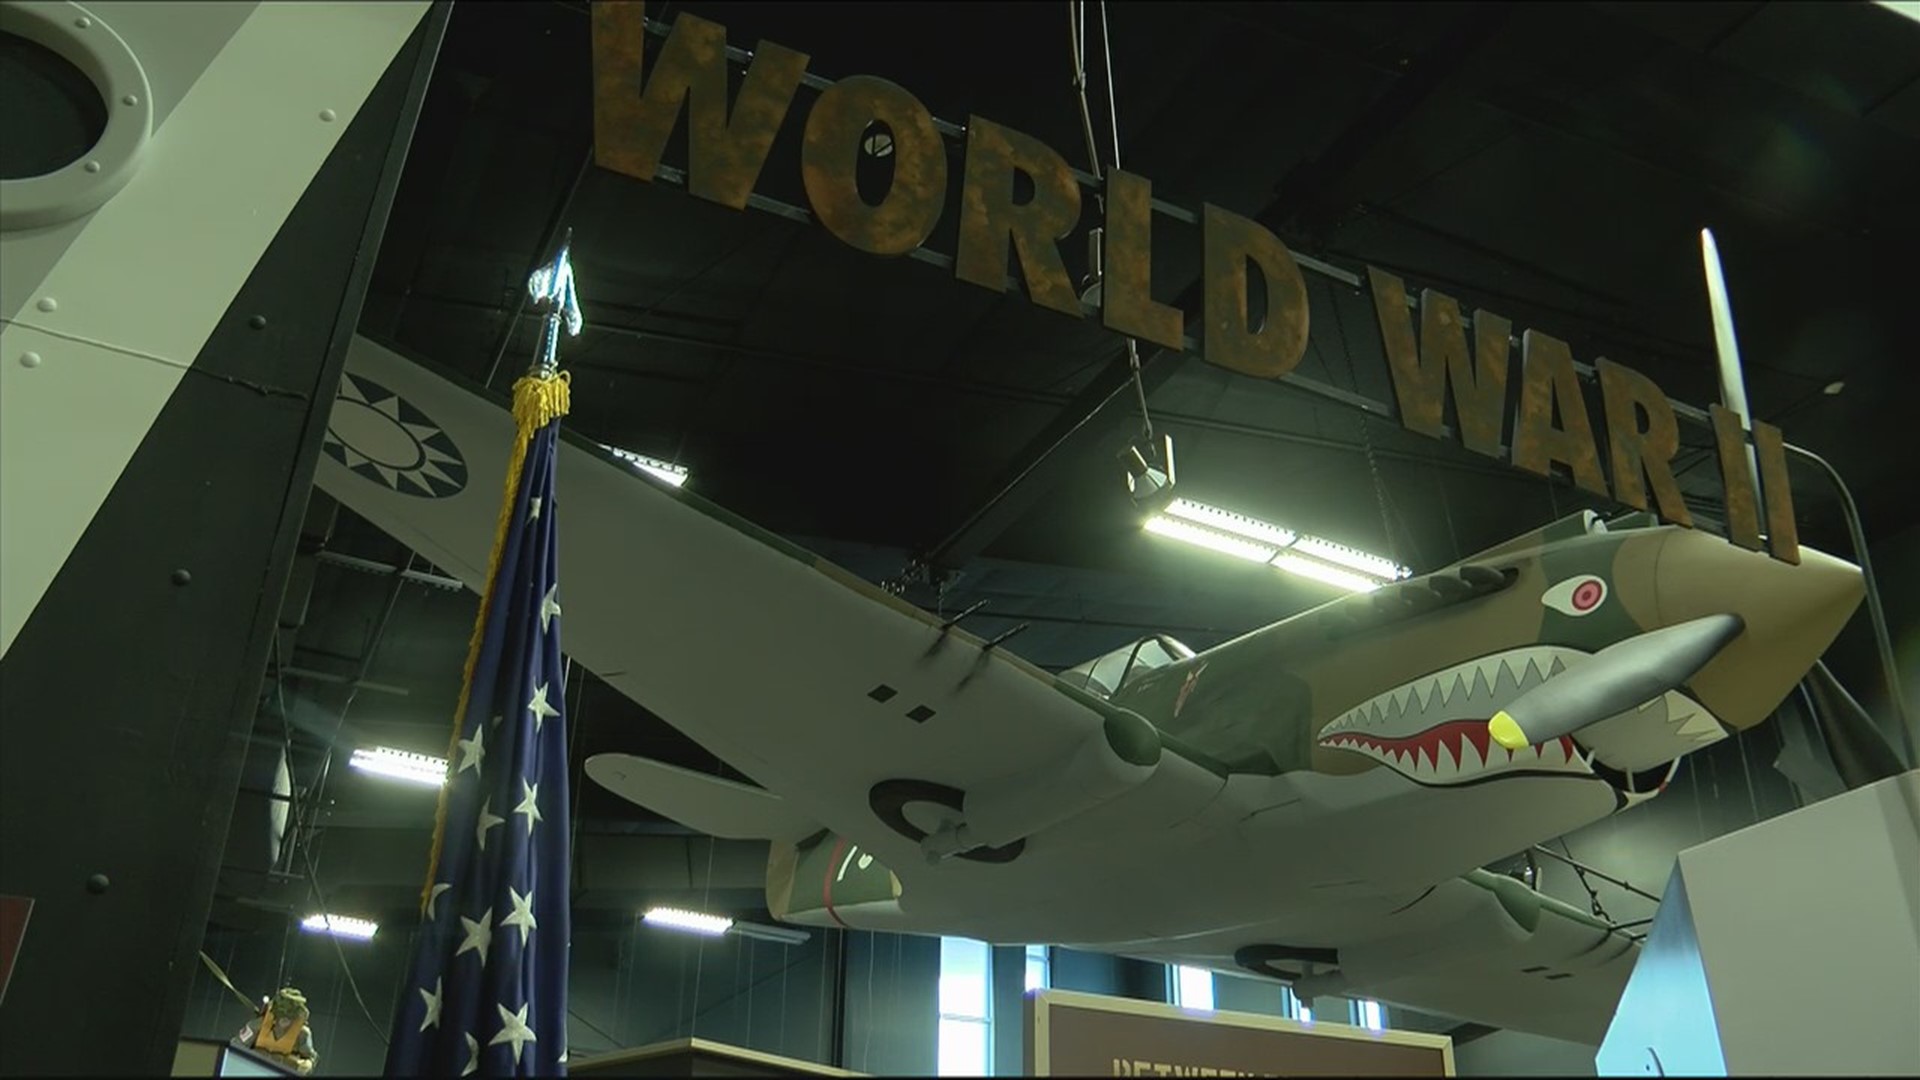 New exhibit opens honoring Iowans in WWII